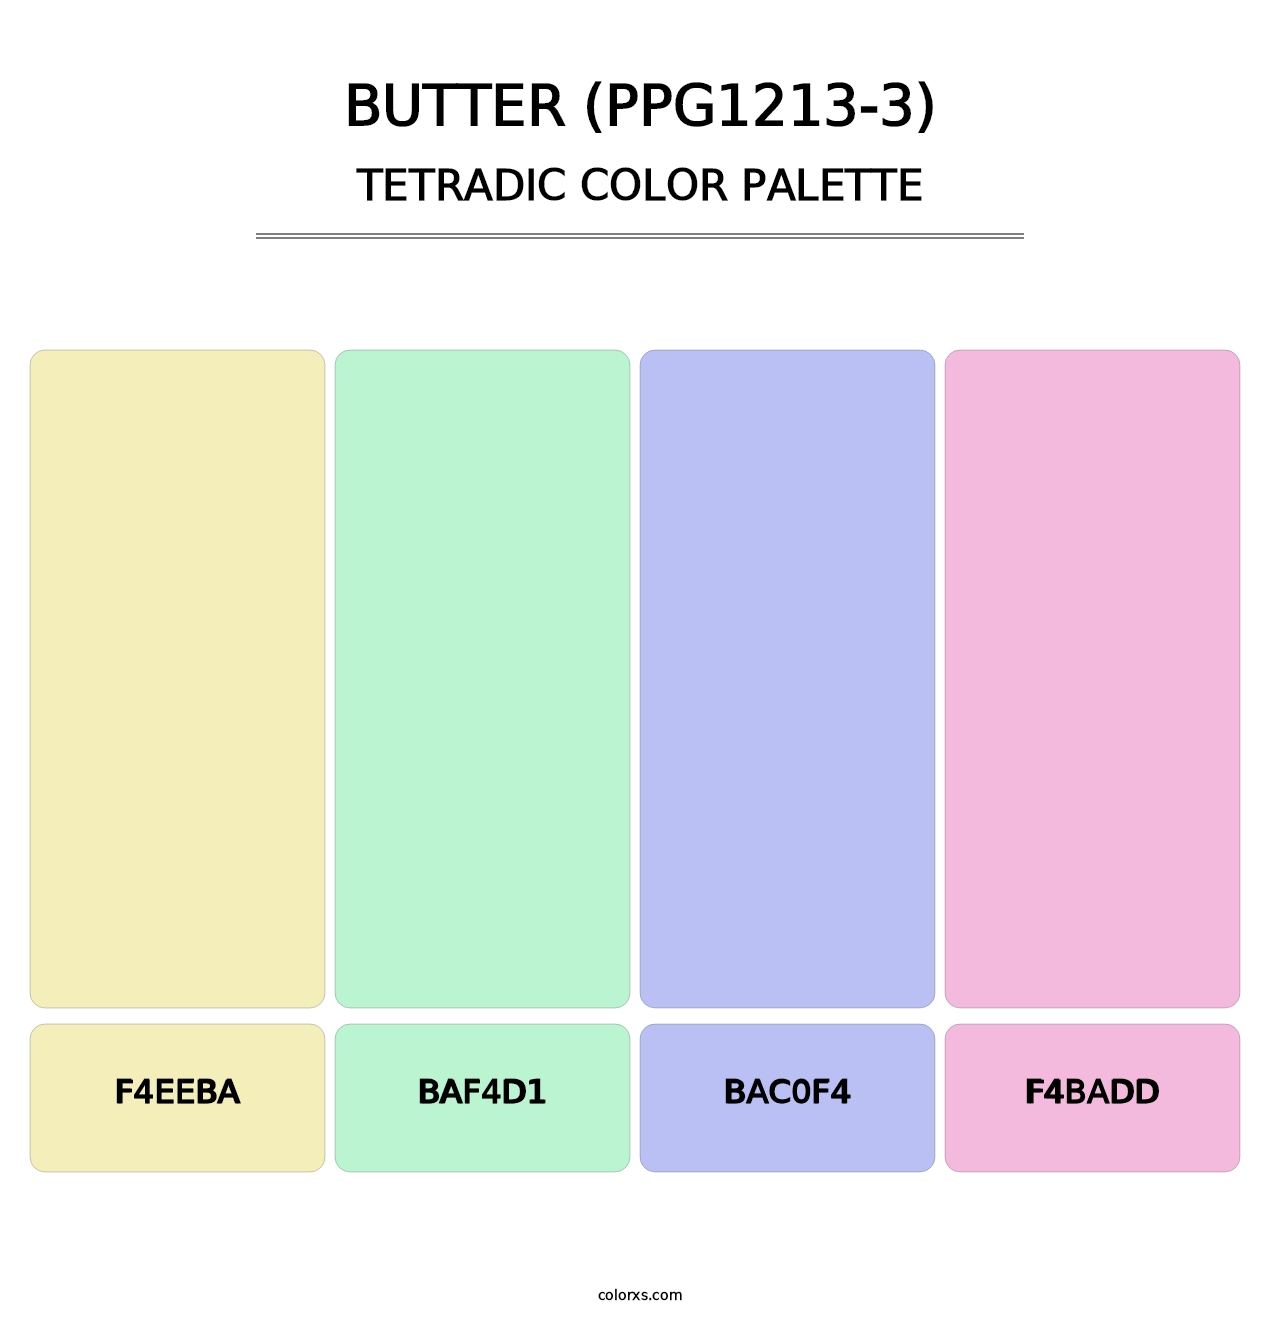 Butter (PPG1213-3) - Tetradic Color Palette